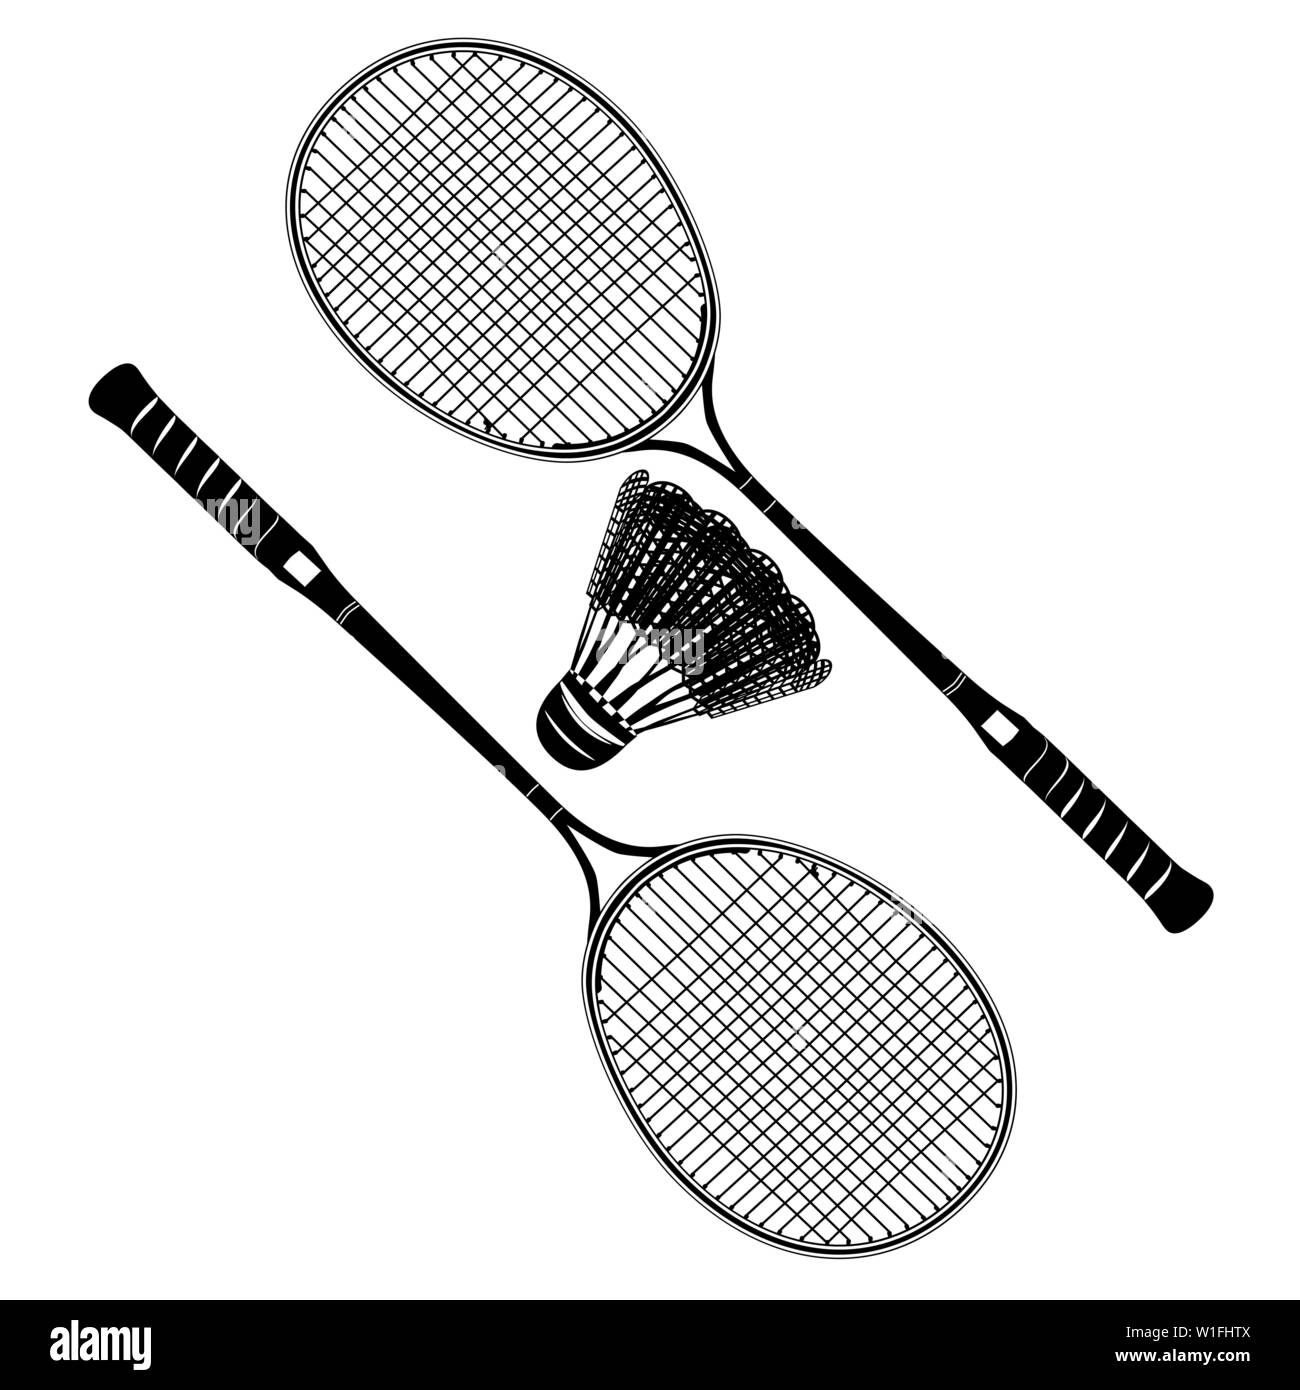 Badminton racket and shuttlecock black silhouettes, vector illustration Stock Vector